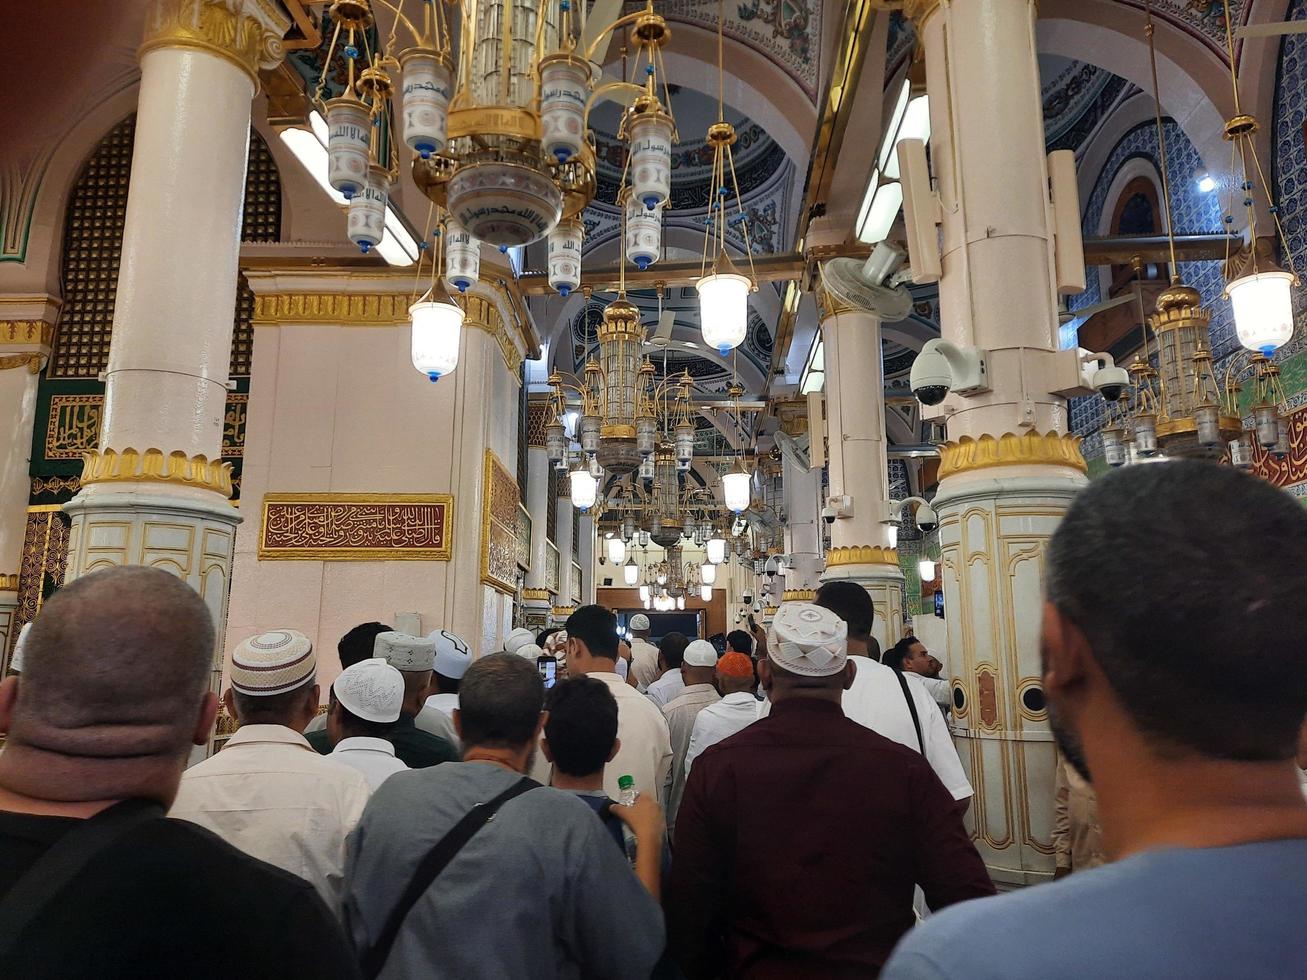 medina, Arabia arabia, ott 2022 - musulmano pellegrini siamo andando per visitare roza rasool a Masjid al nabawi medina. foto